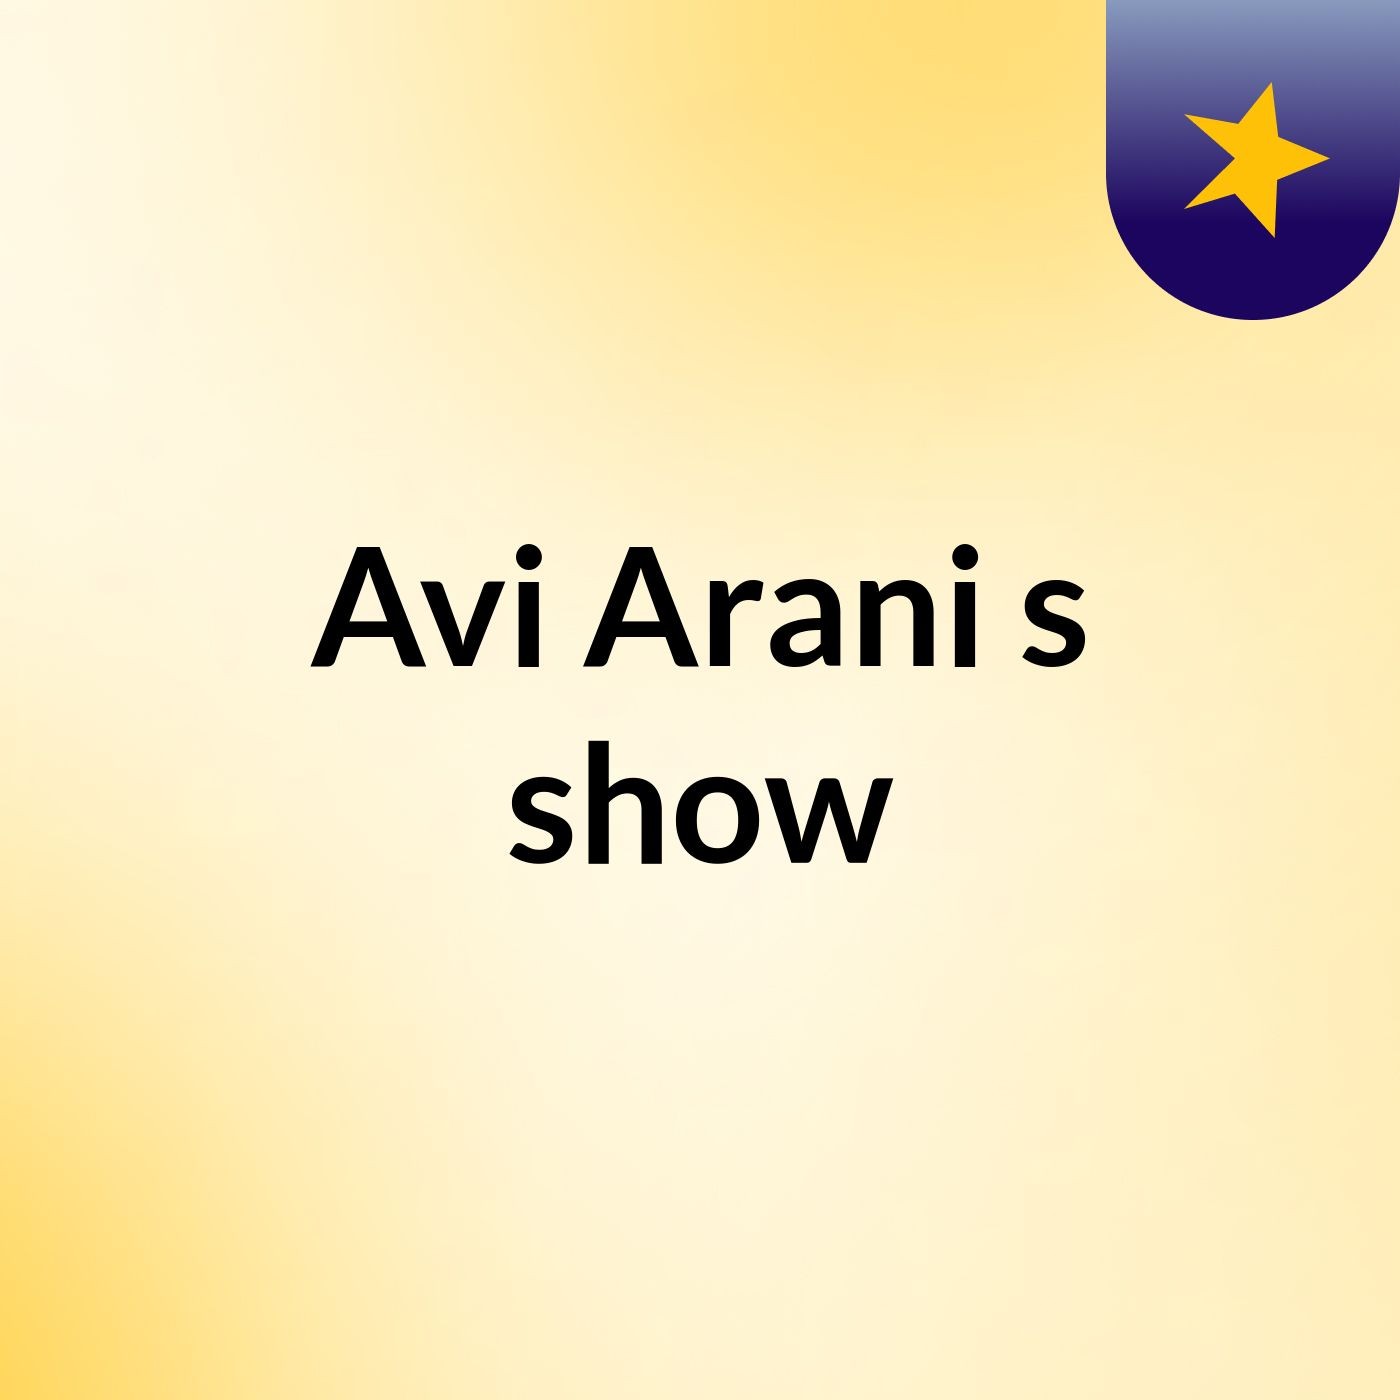 Avi Arani's show